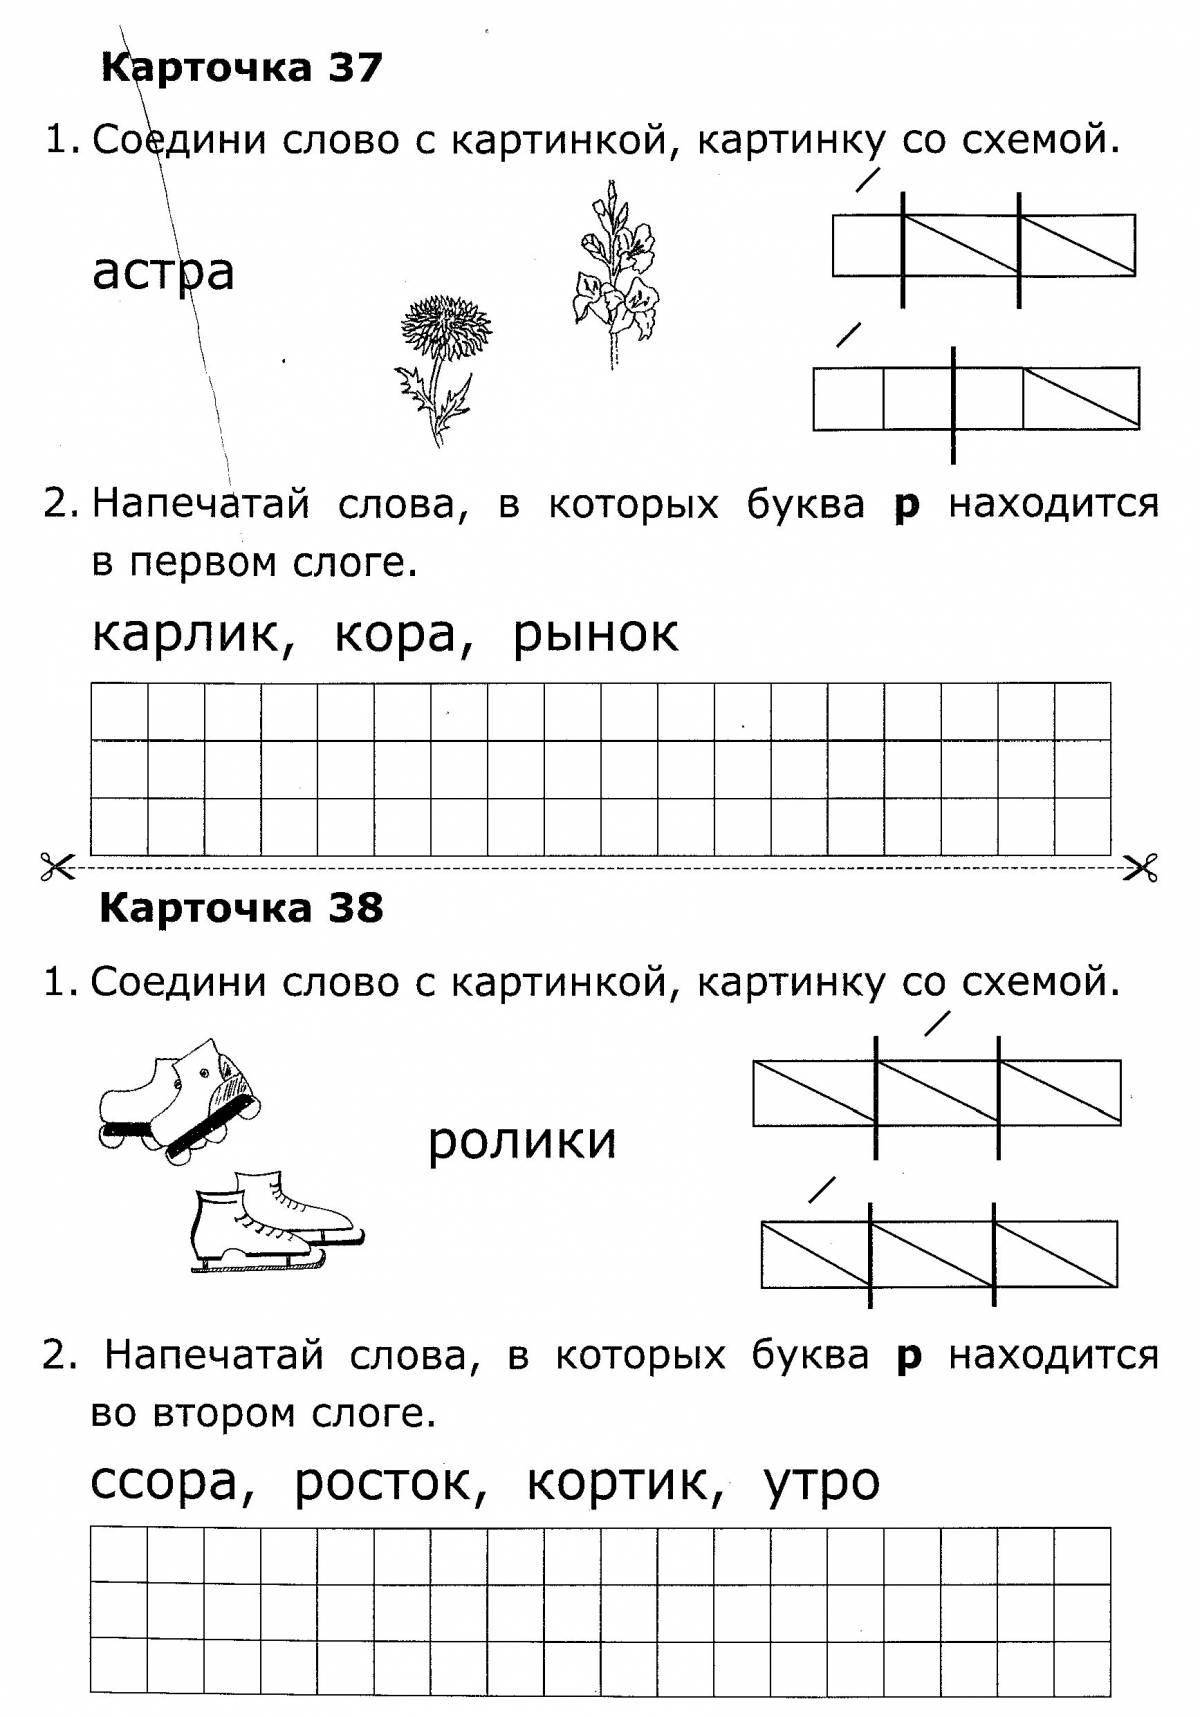 Color-explosion 1st grade Russian school coloring book